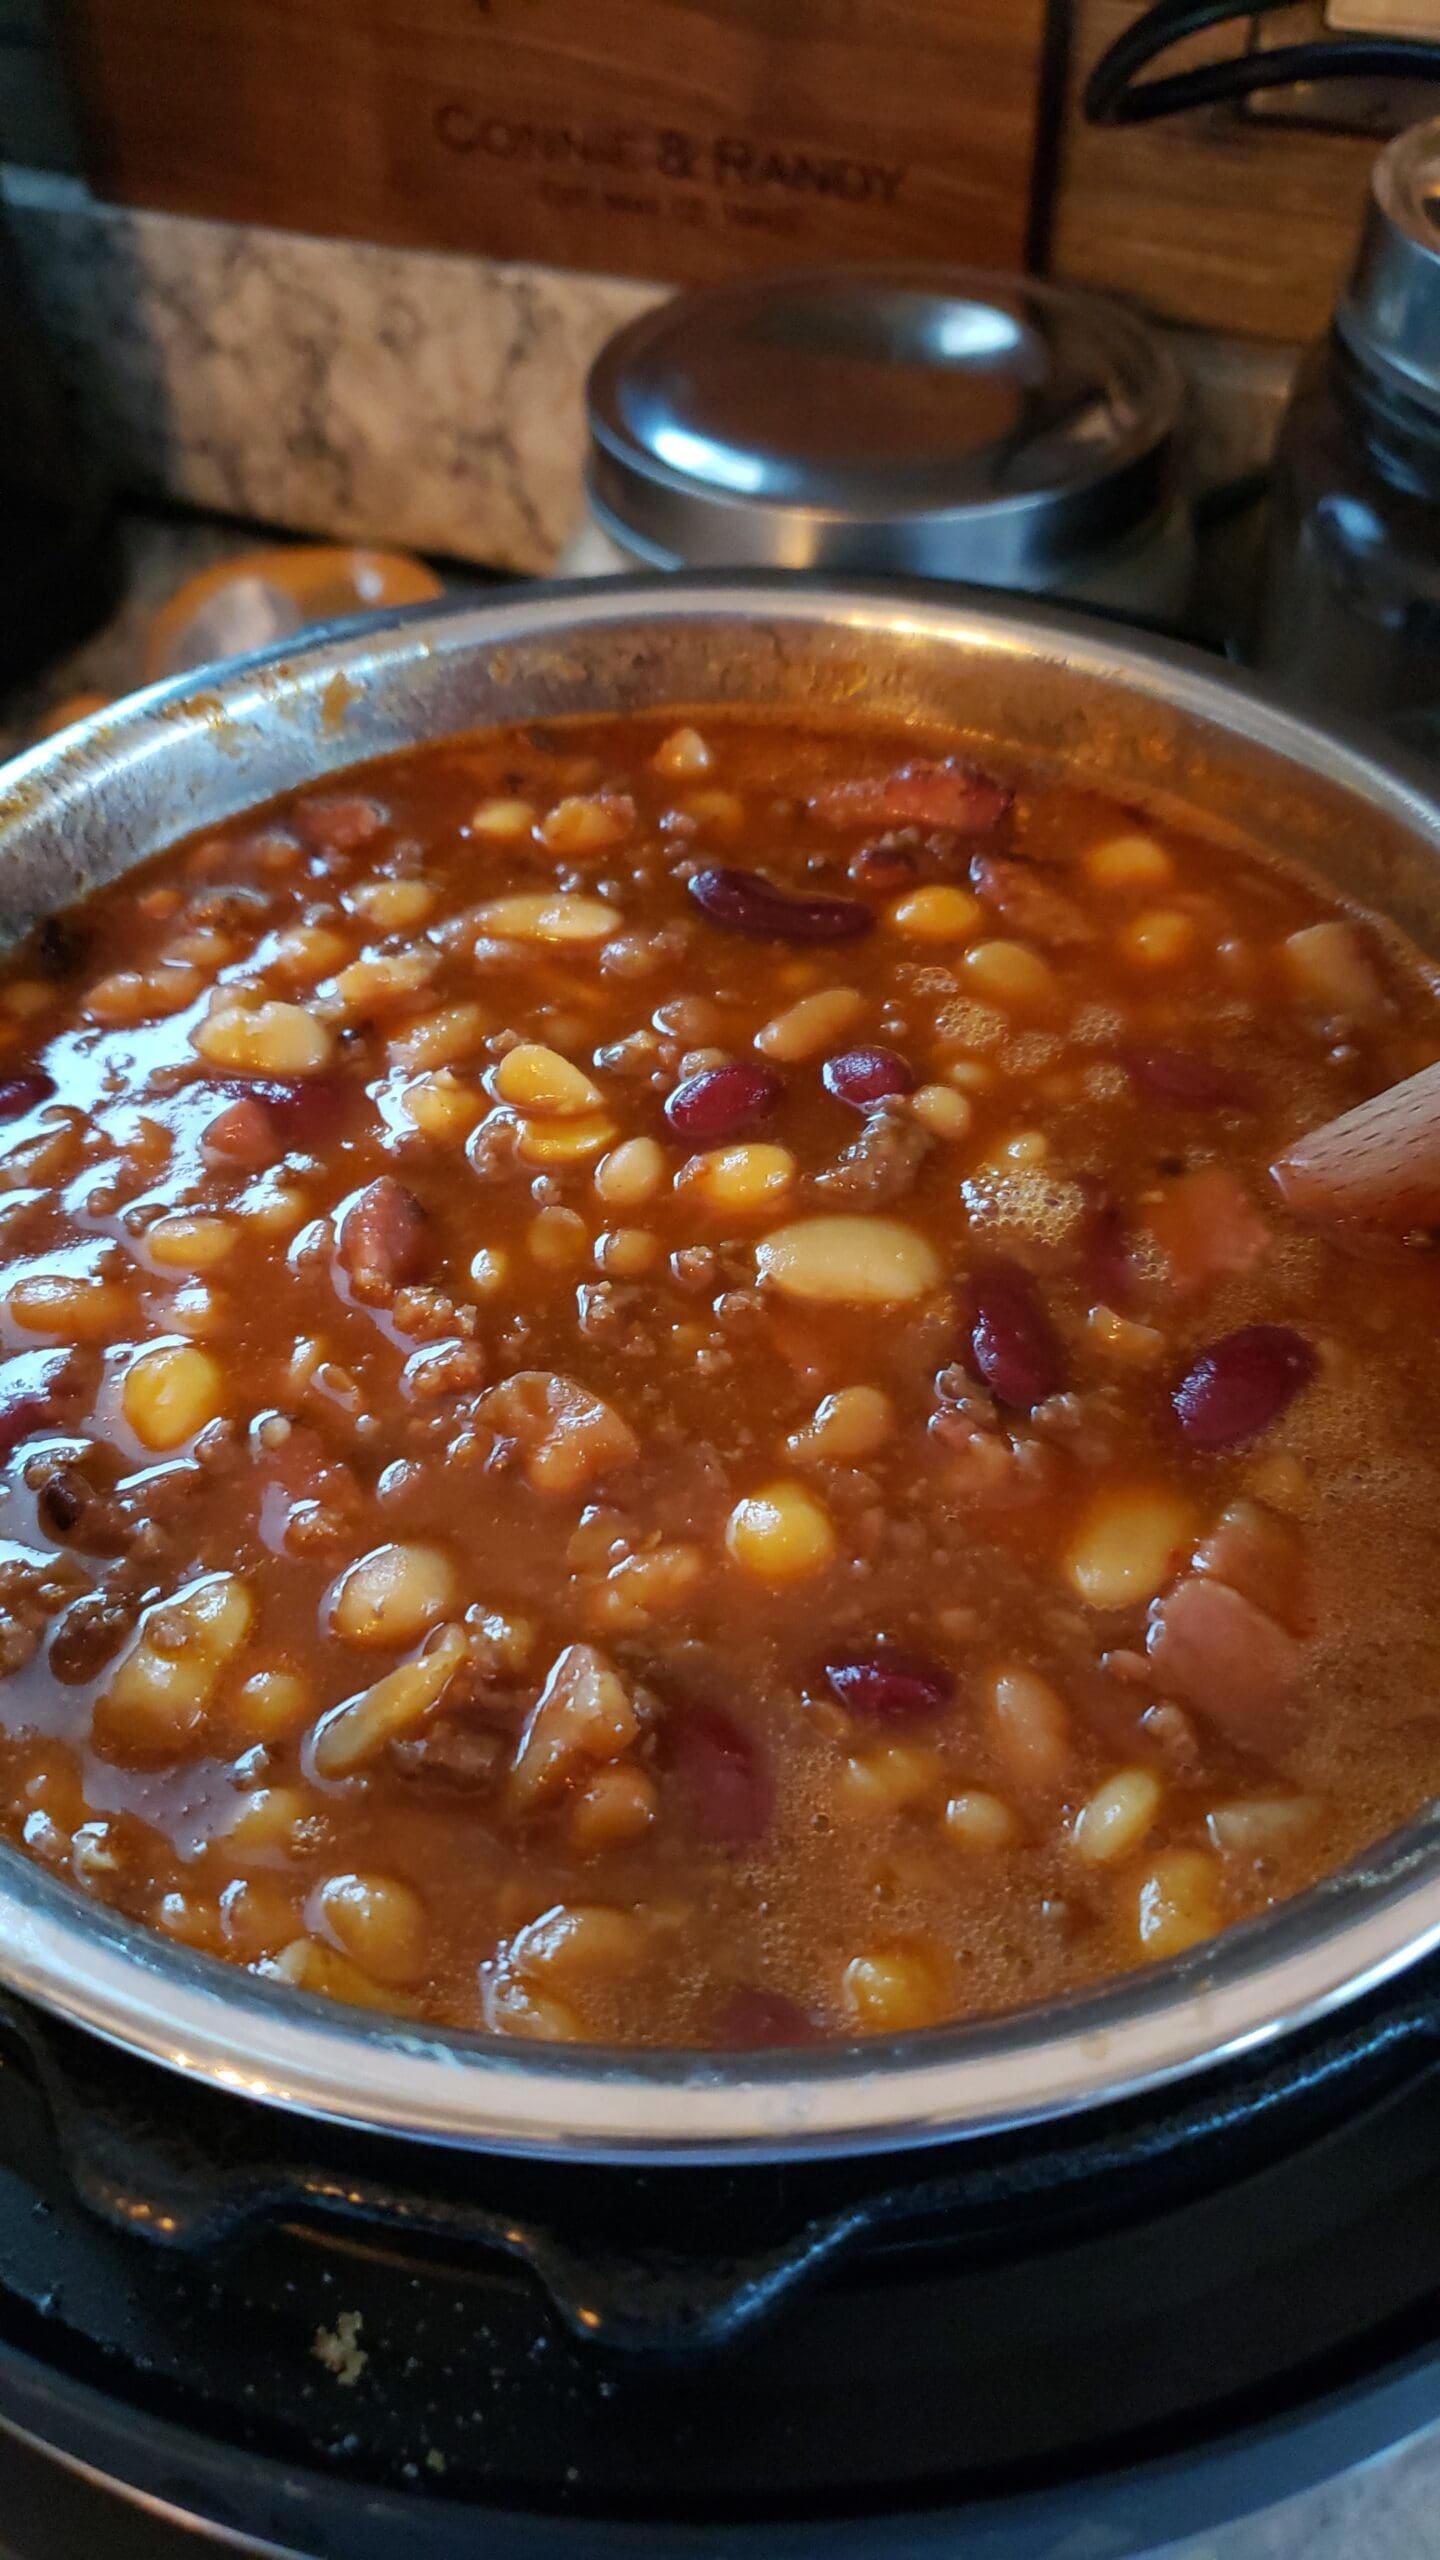 Killer beans soup